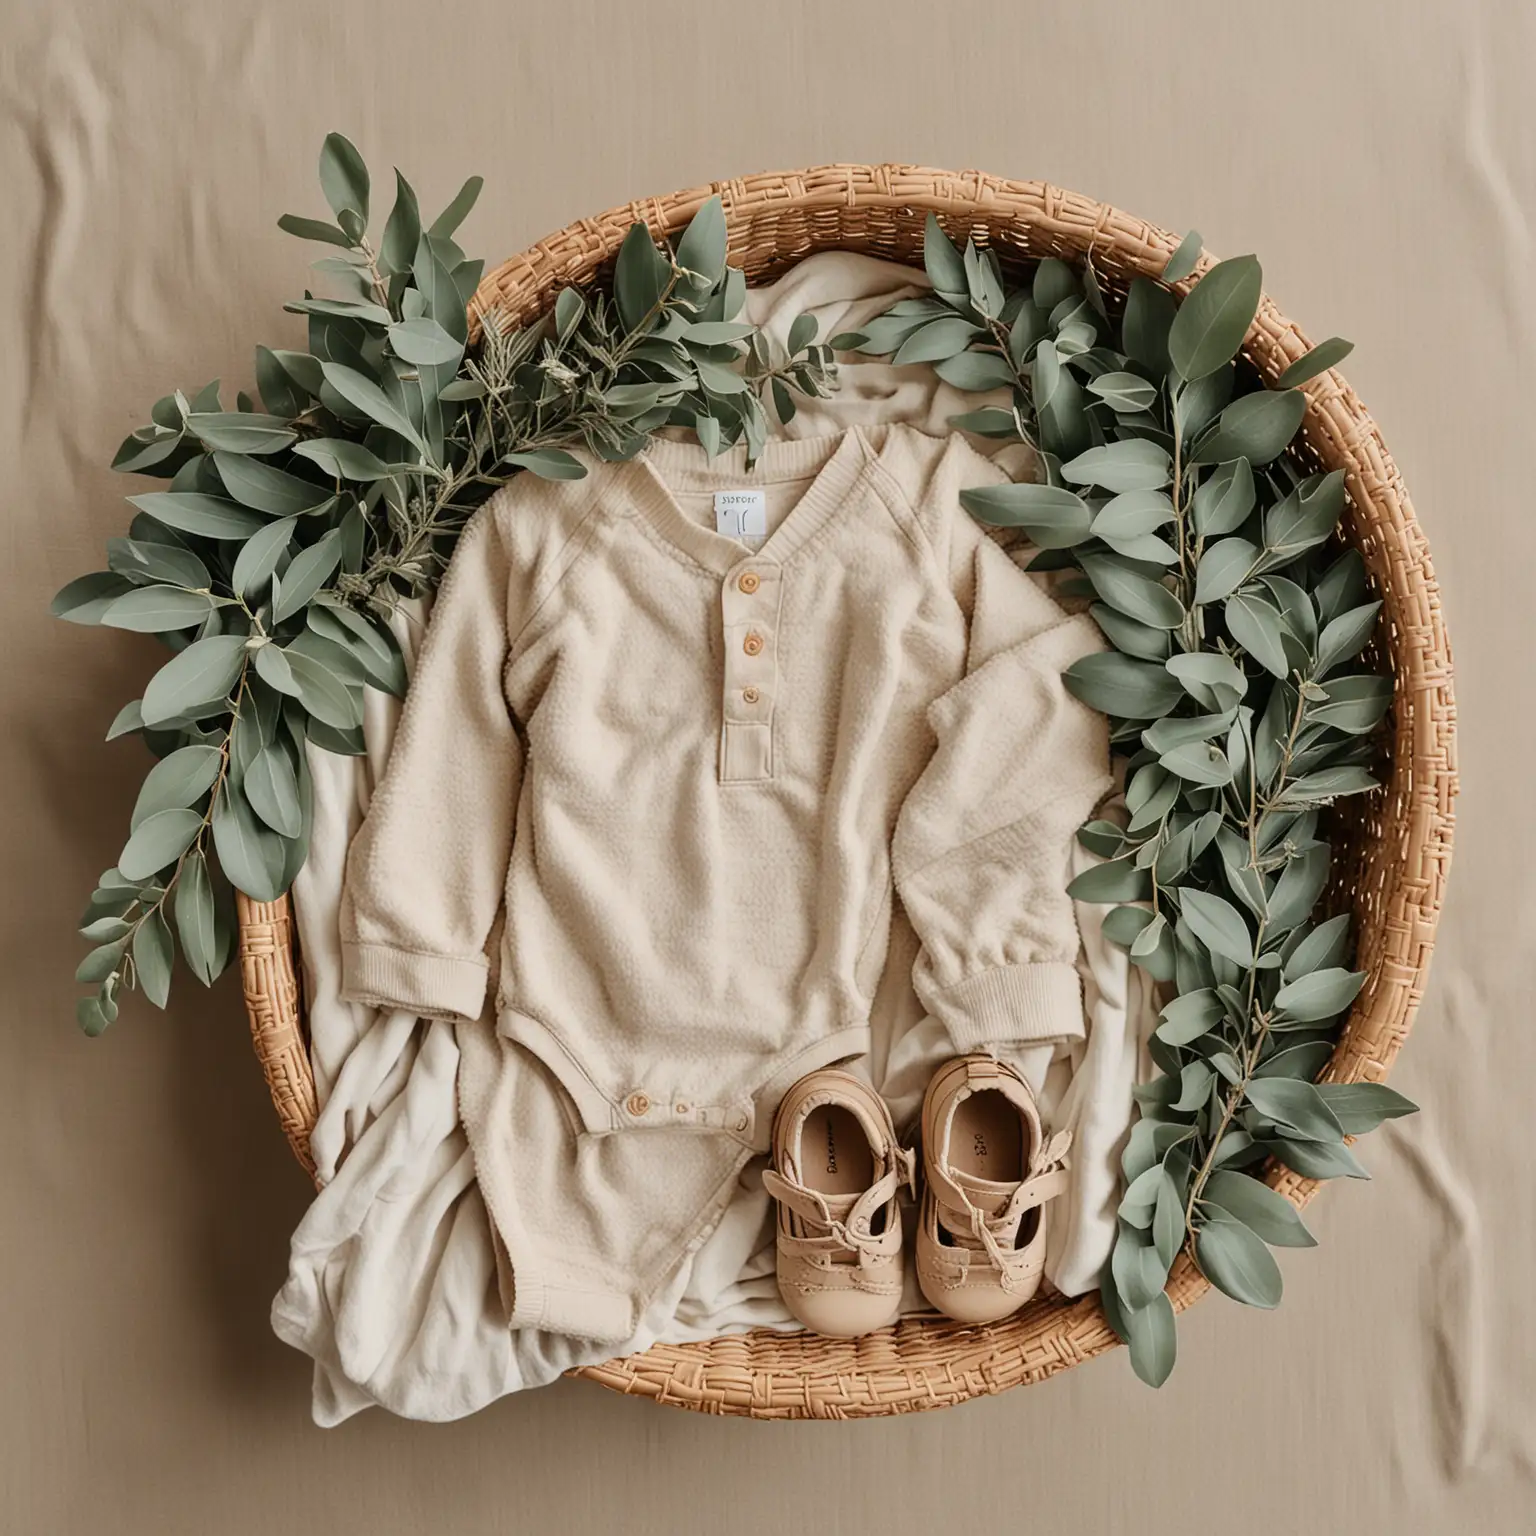 flat lay image, cane basket, baby onesie, baby shoes, sage green foliage, fluffy beige blanket